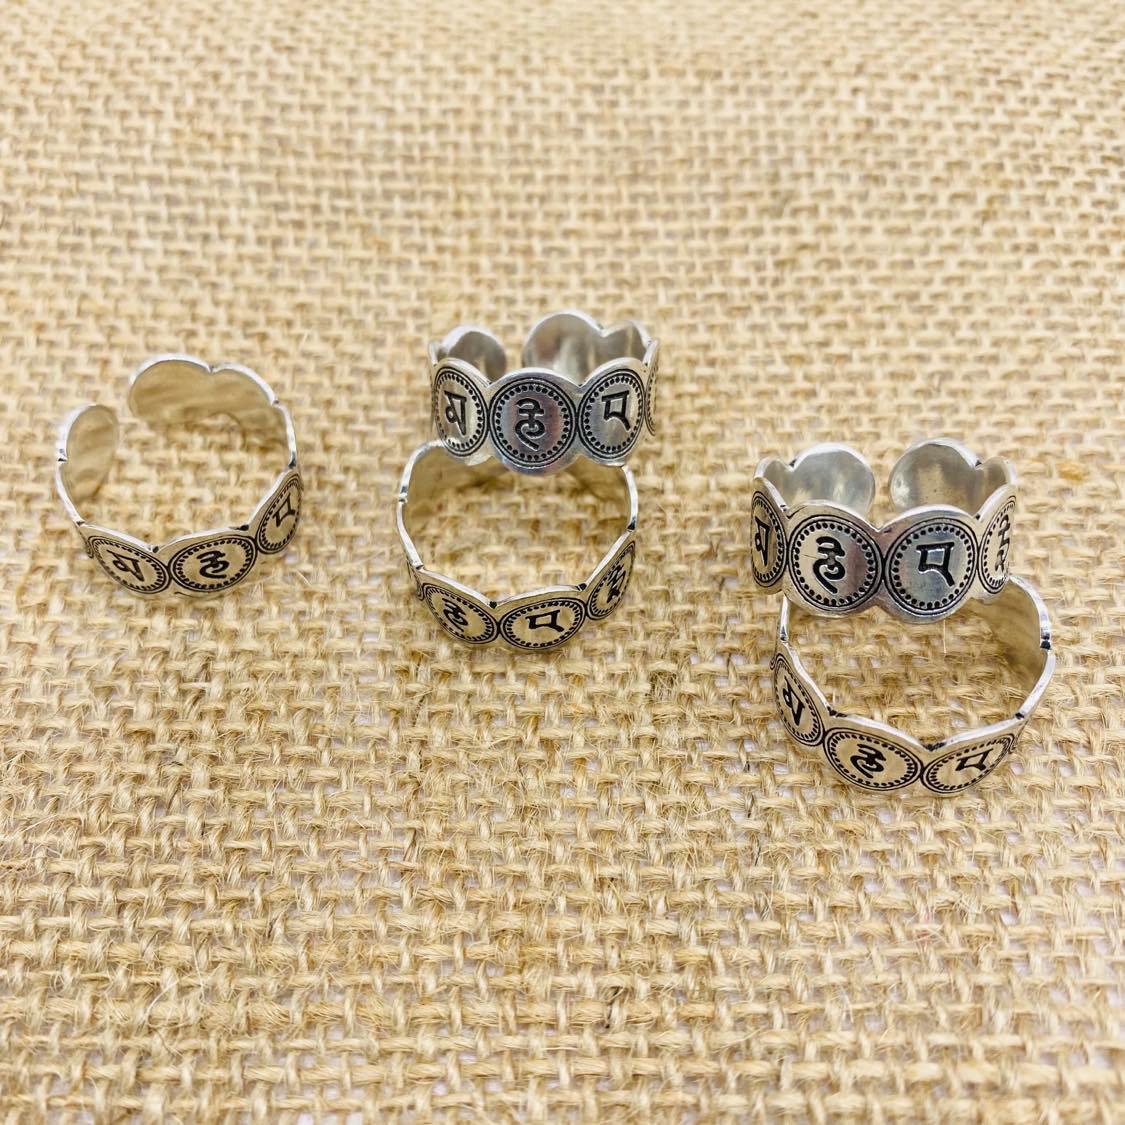 Buddhist Mantra Ring, Silver Adjustable Ring, Om Mani Padme Hum Ring, Handmade Jewelry, Meditation Jewelry, Unisex Boho Ring, Yoga Gift